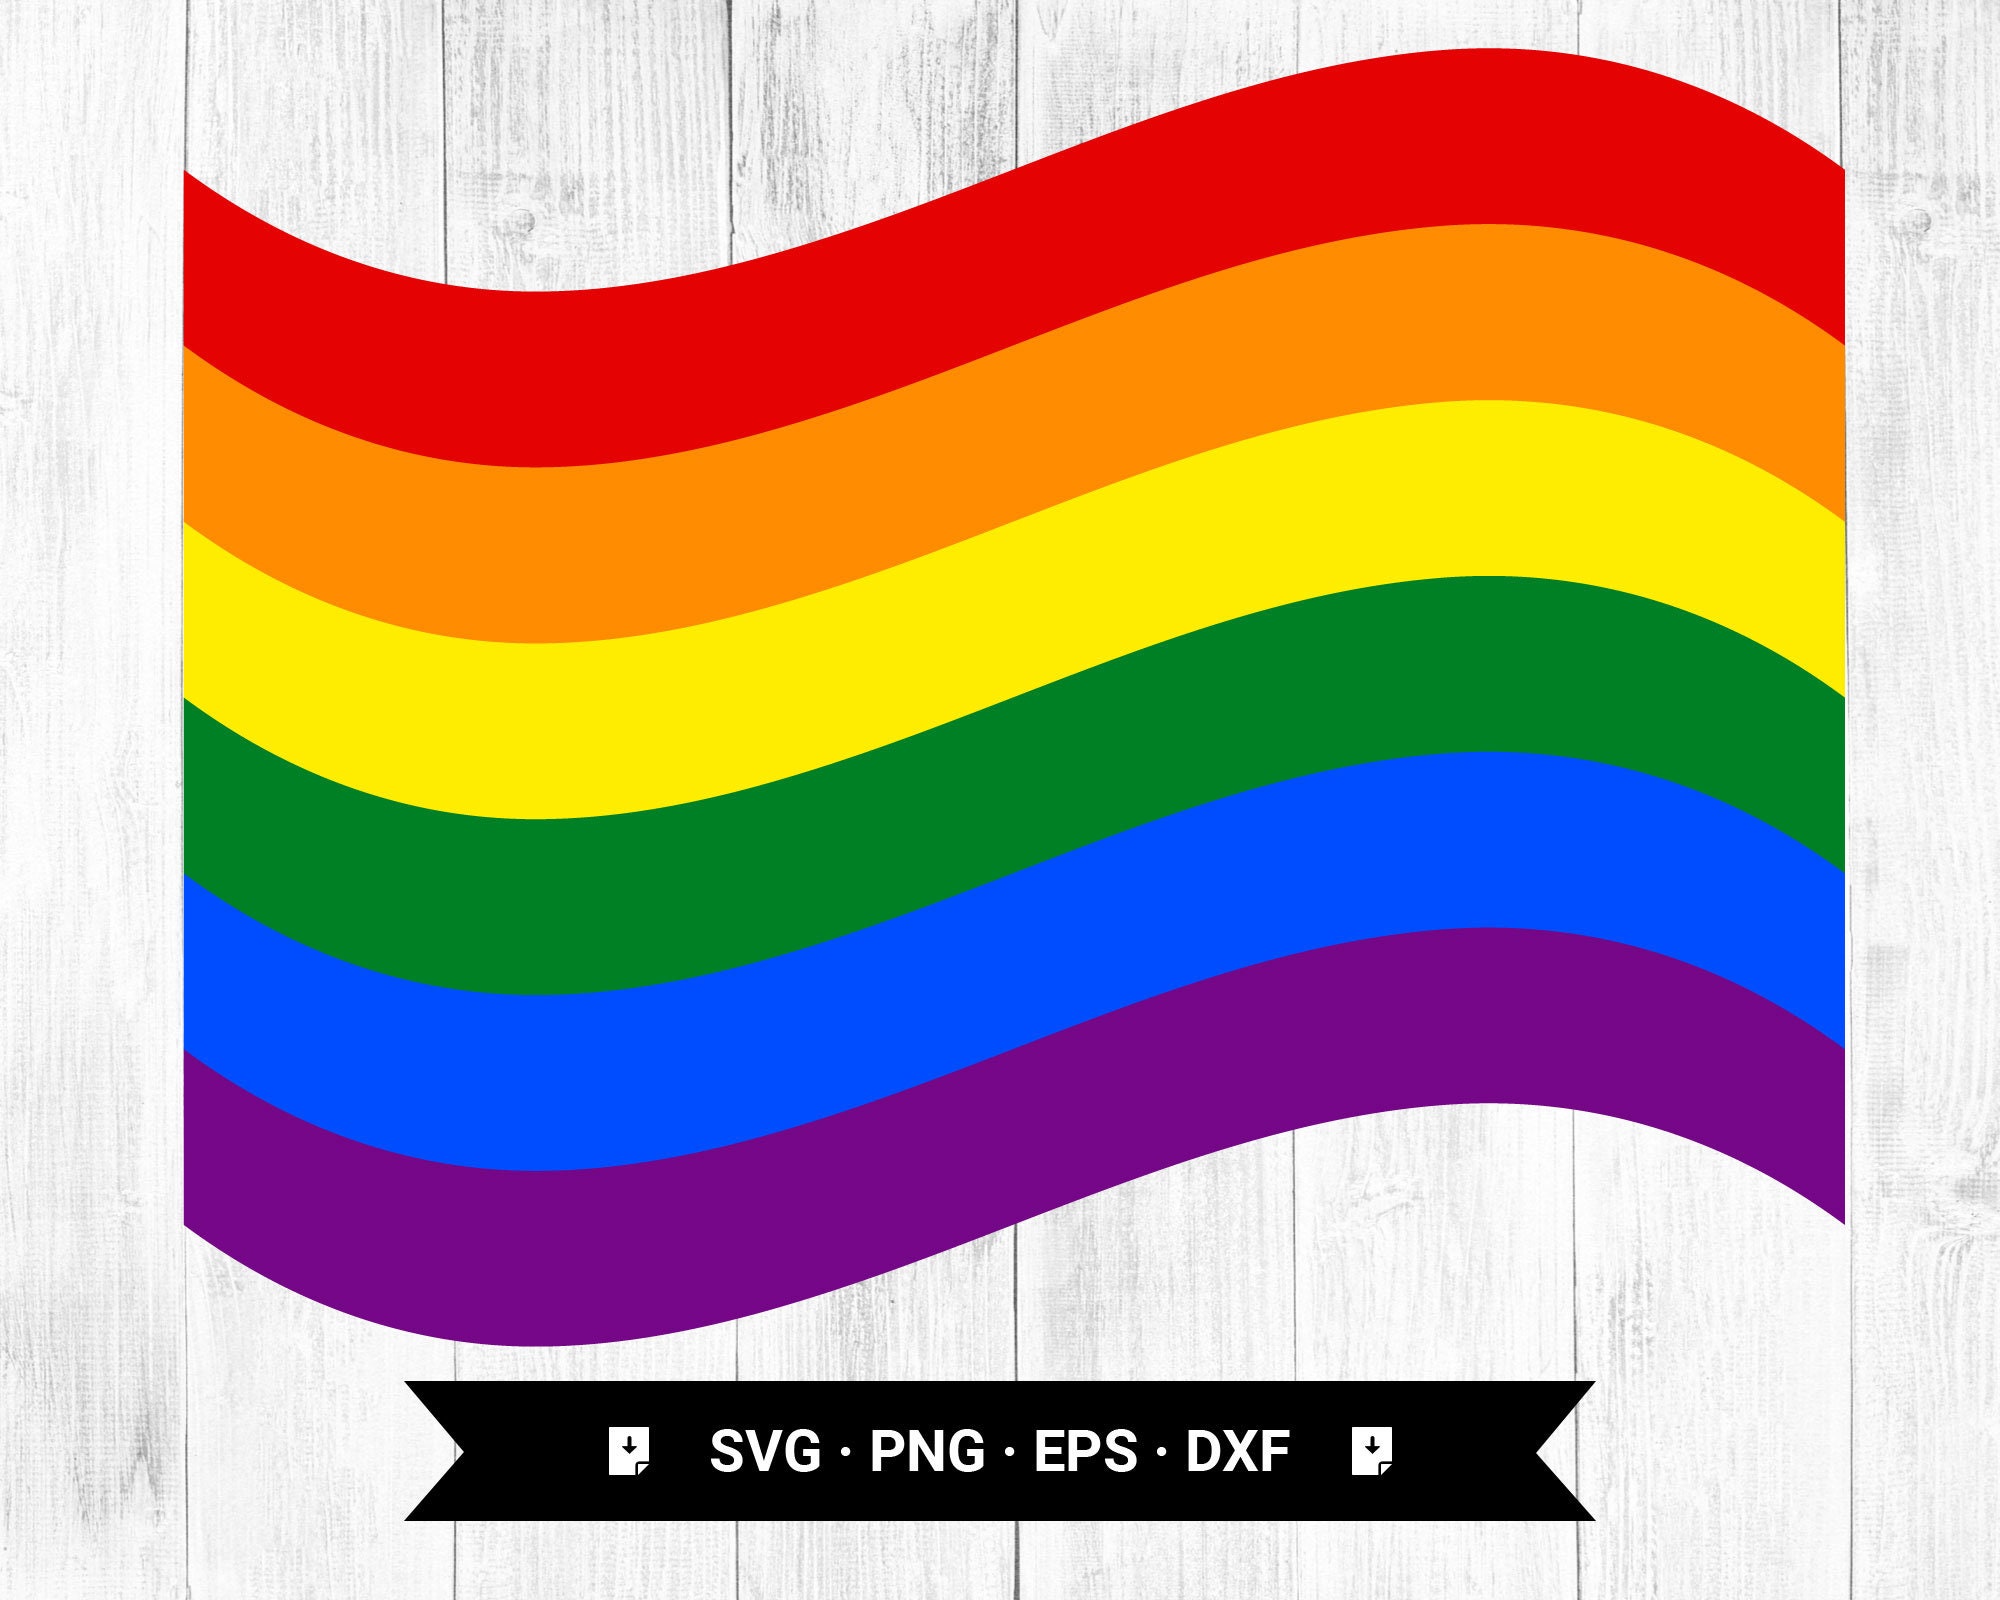 Pride flag pride SVG pride PNGlayered pride pride DFX | Etsy